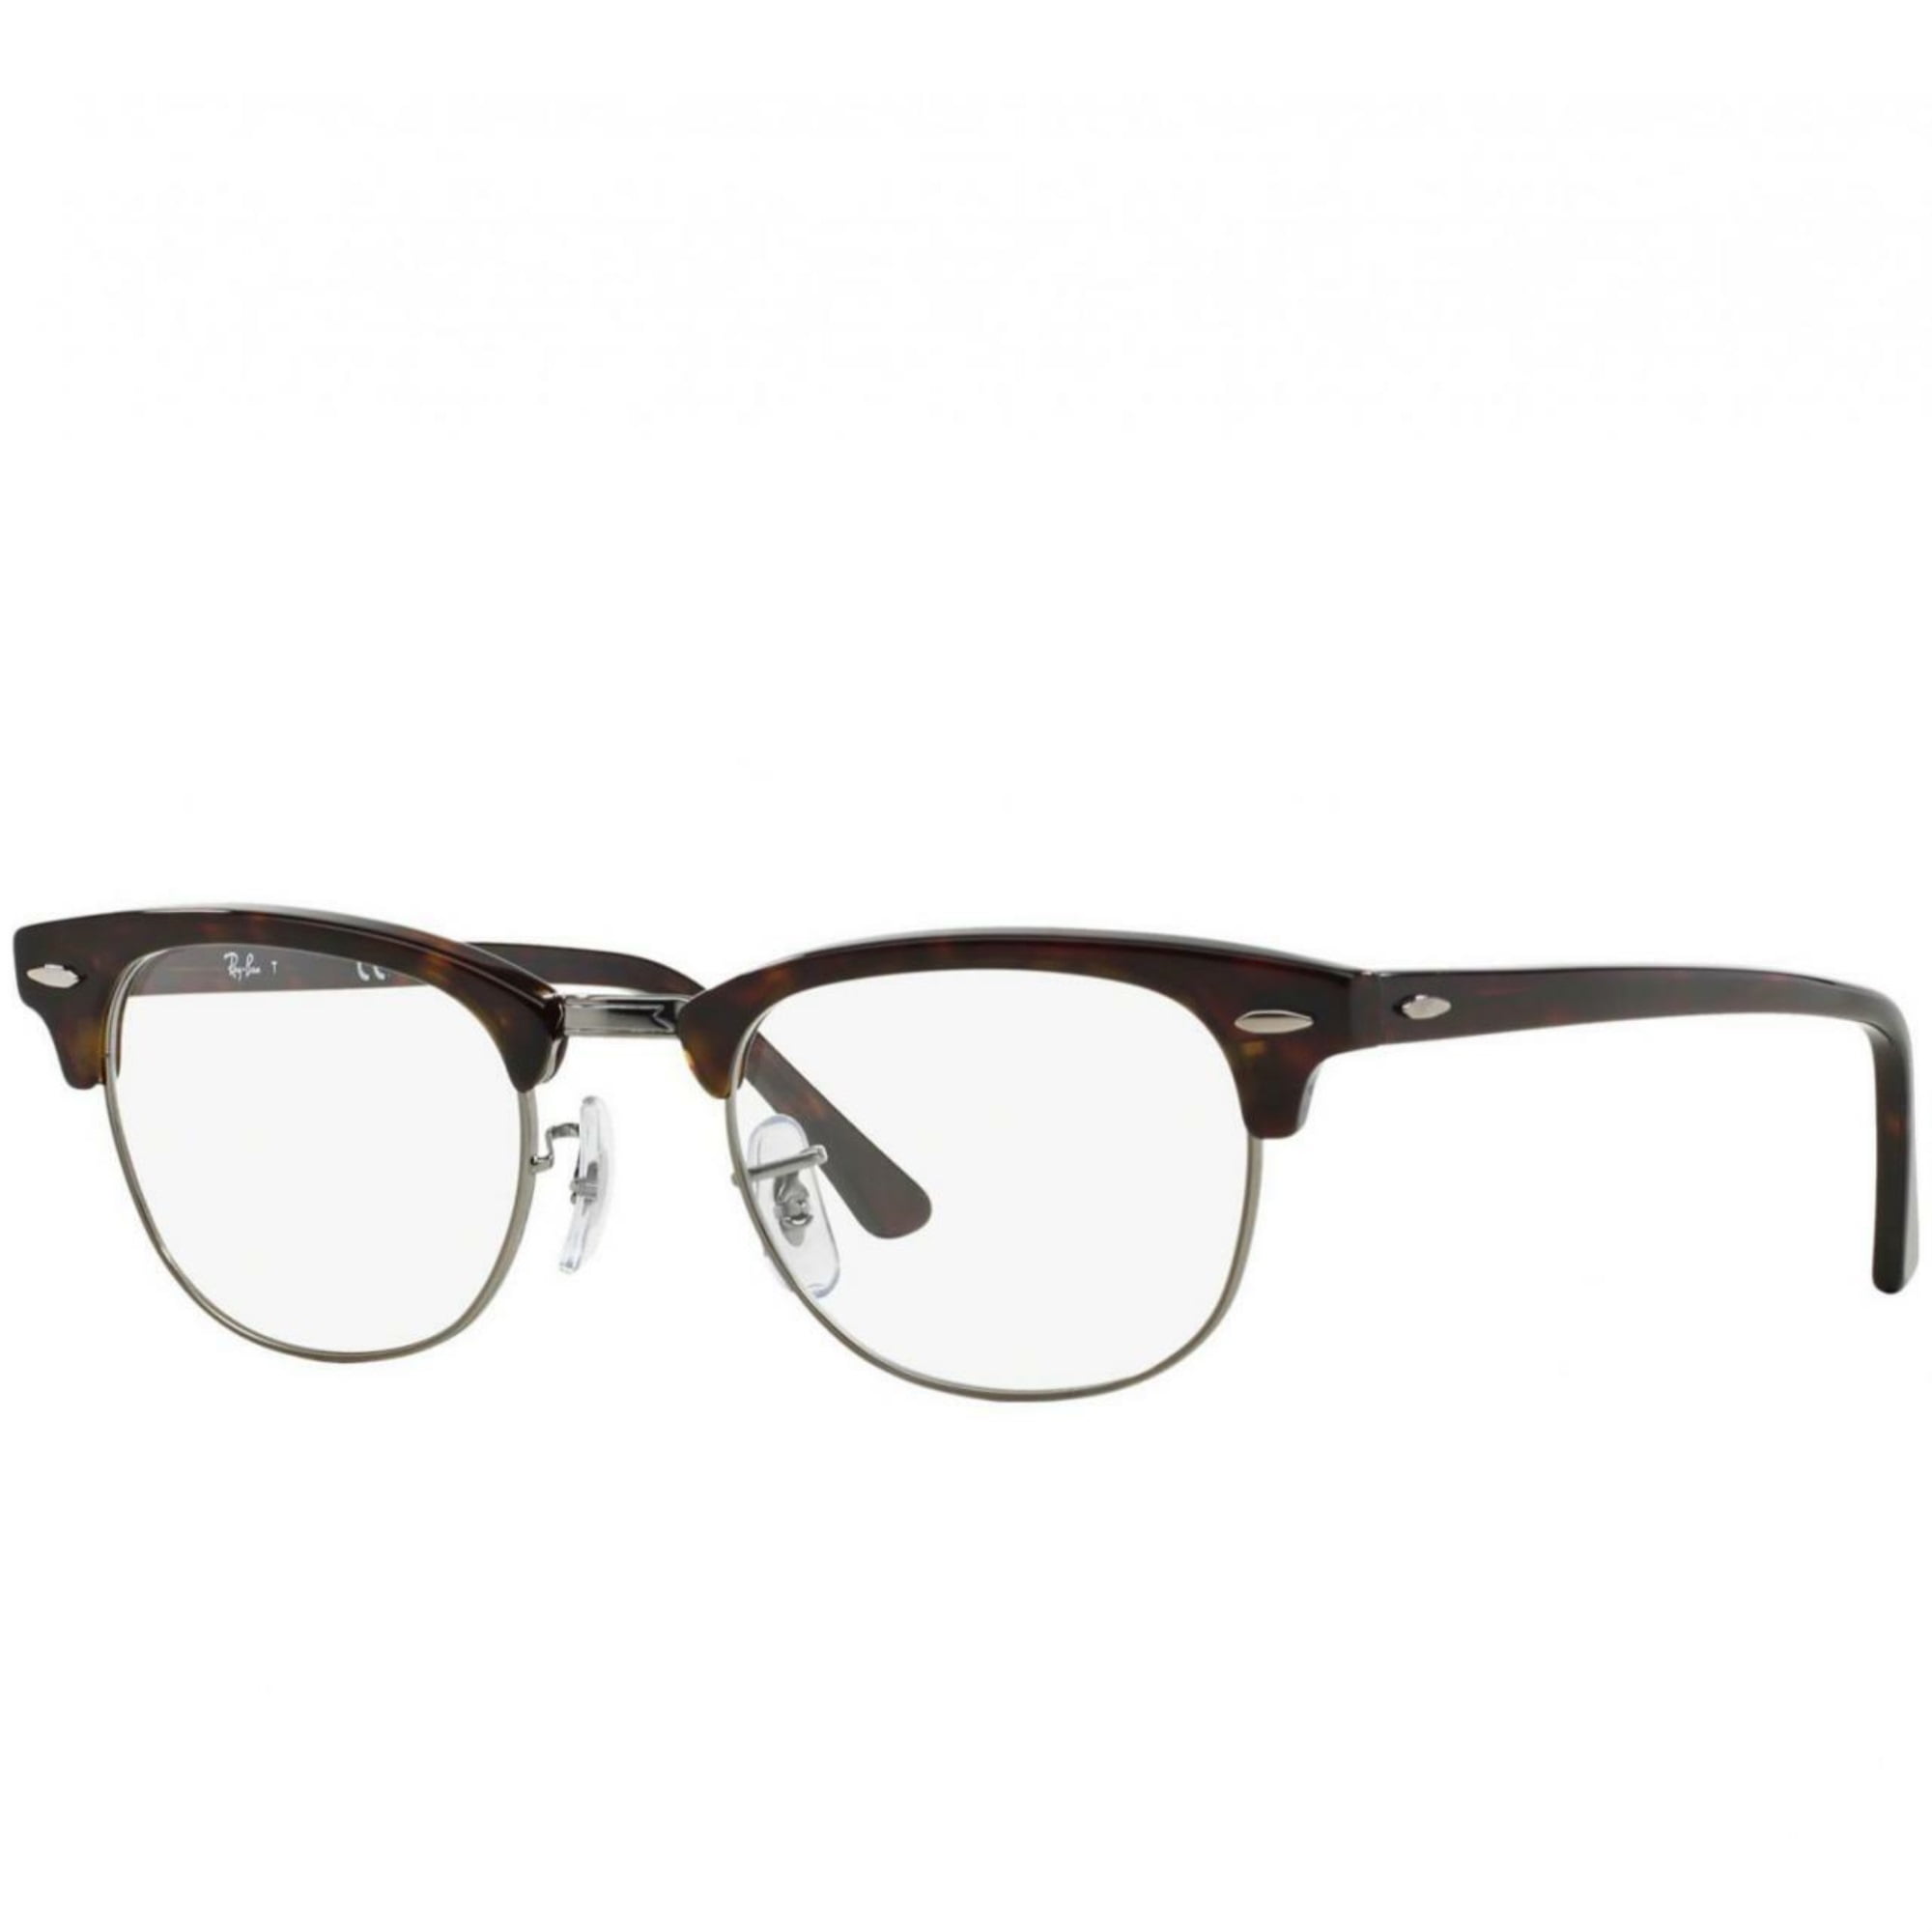 Ray-Ban RB5154 2012 Clubmaster Optics Tortoise Full Rim Square Eyeglasses  Frames 